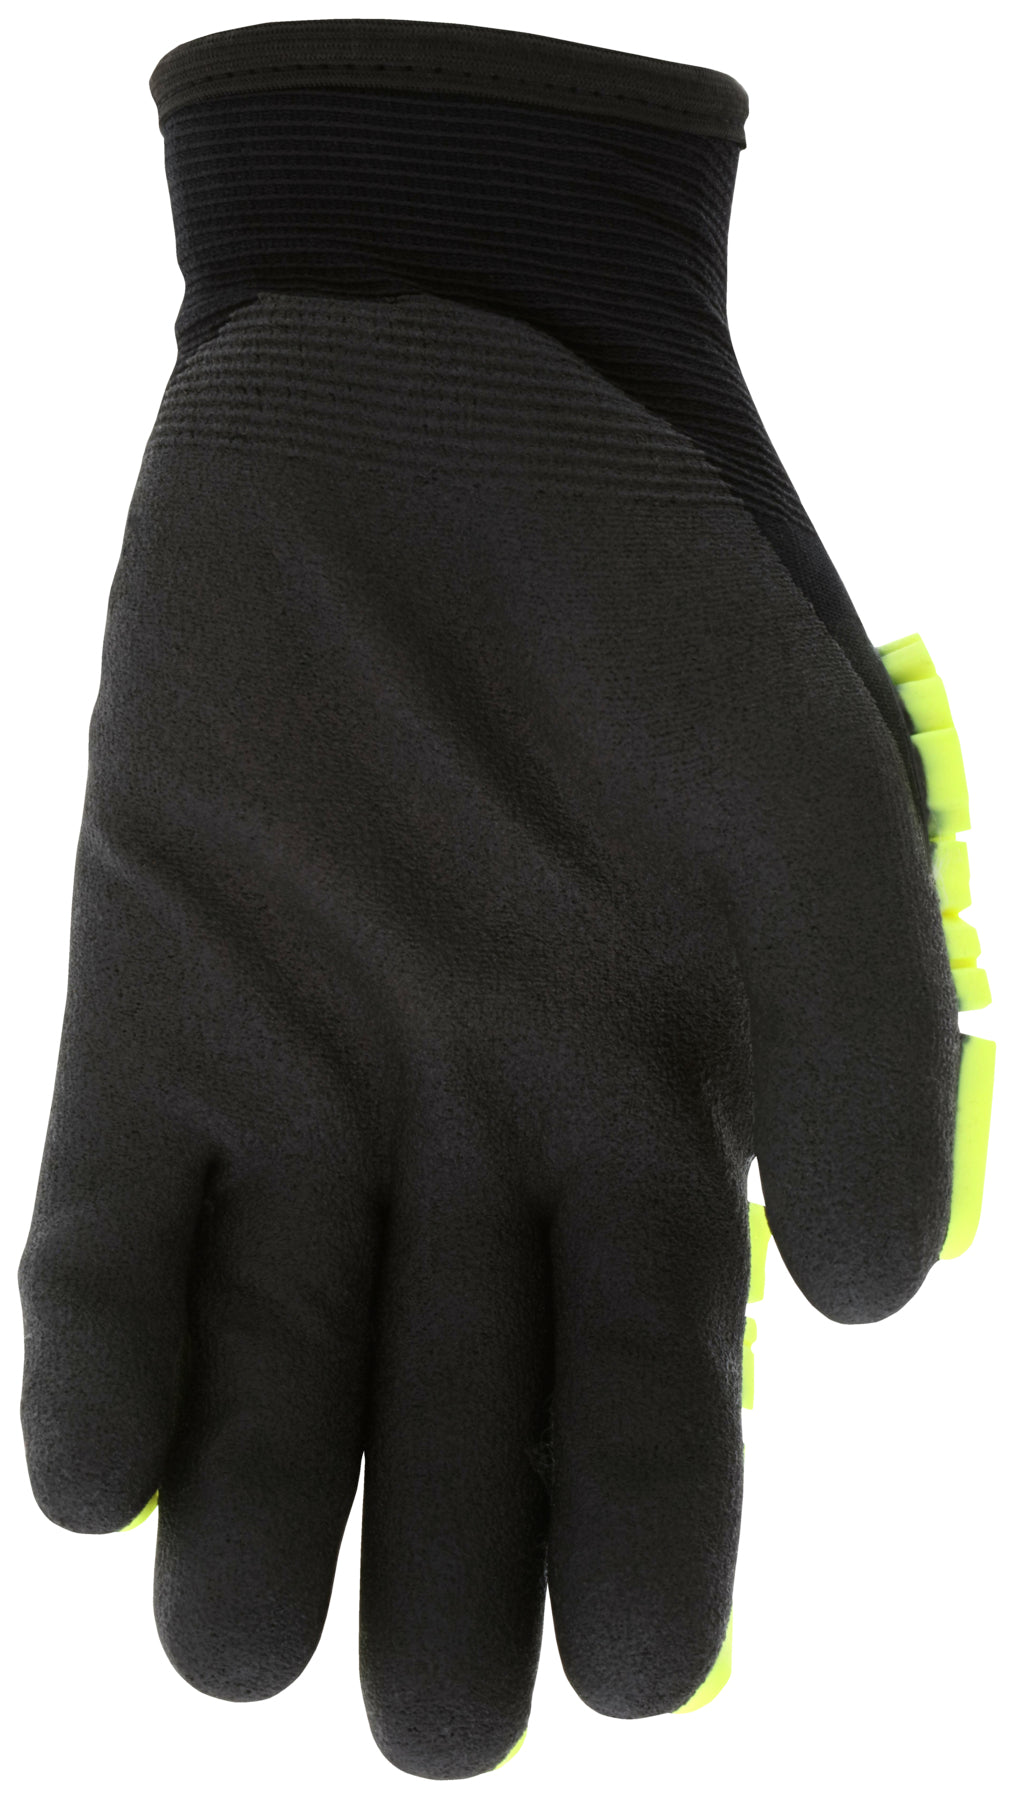 PD3951 - Predator® Insulated Mechanics Gloves